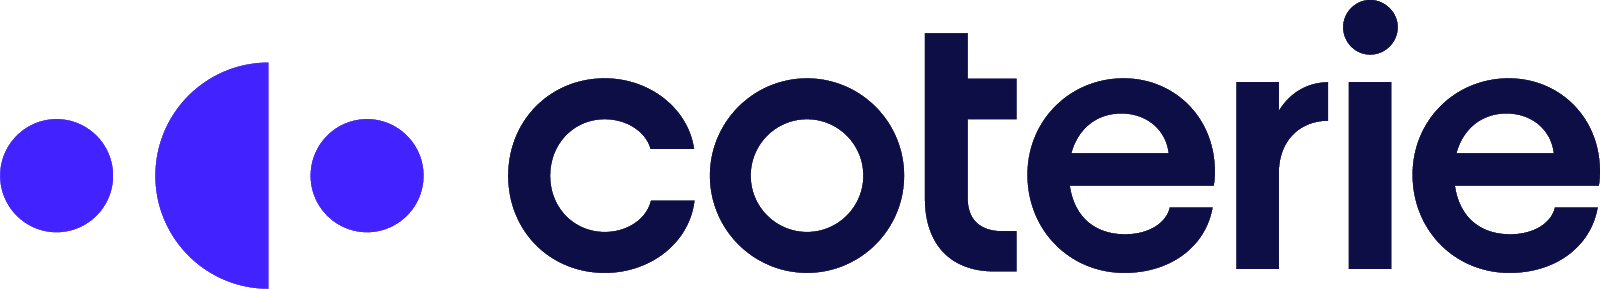 Coterie Logo.png